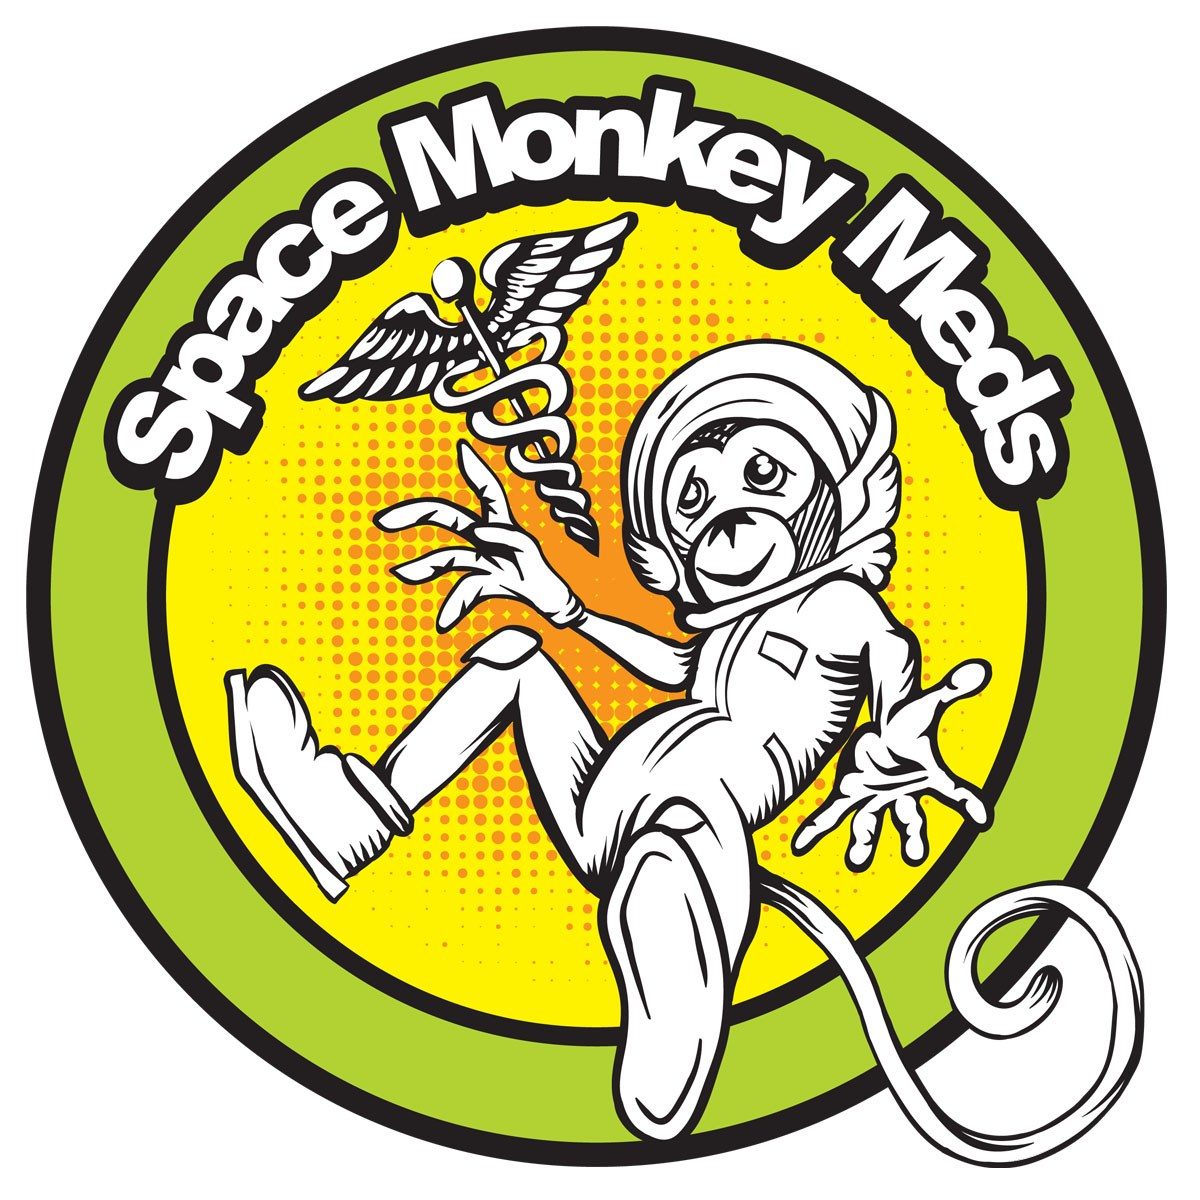 Space Monkey ашка. Space Monkey Одноразка. Space Monkey Гоа. Monkey Space диджей. Space monkey